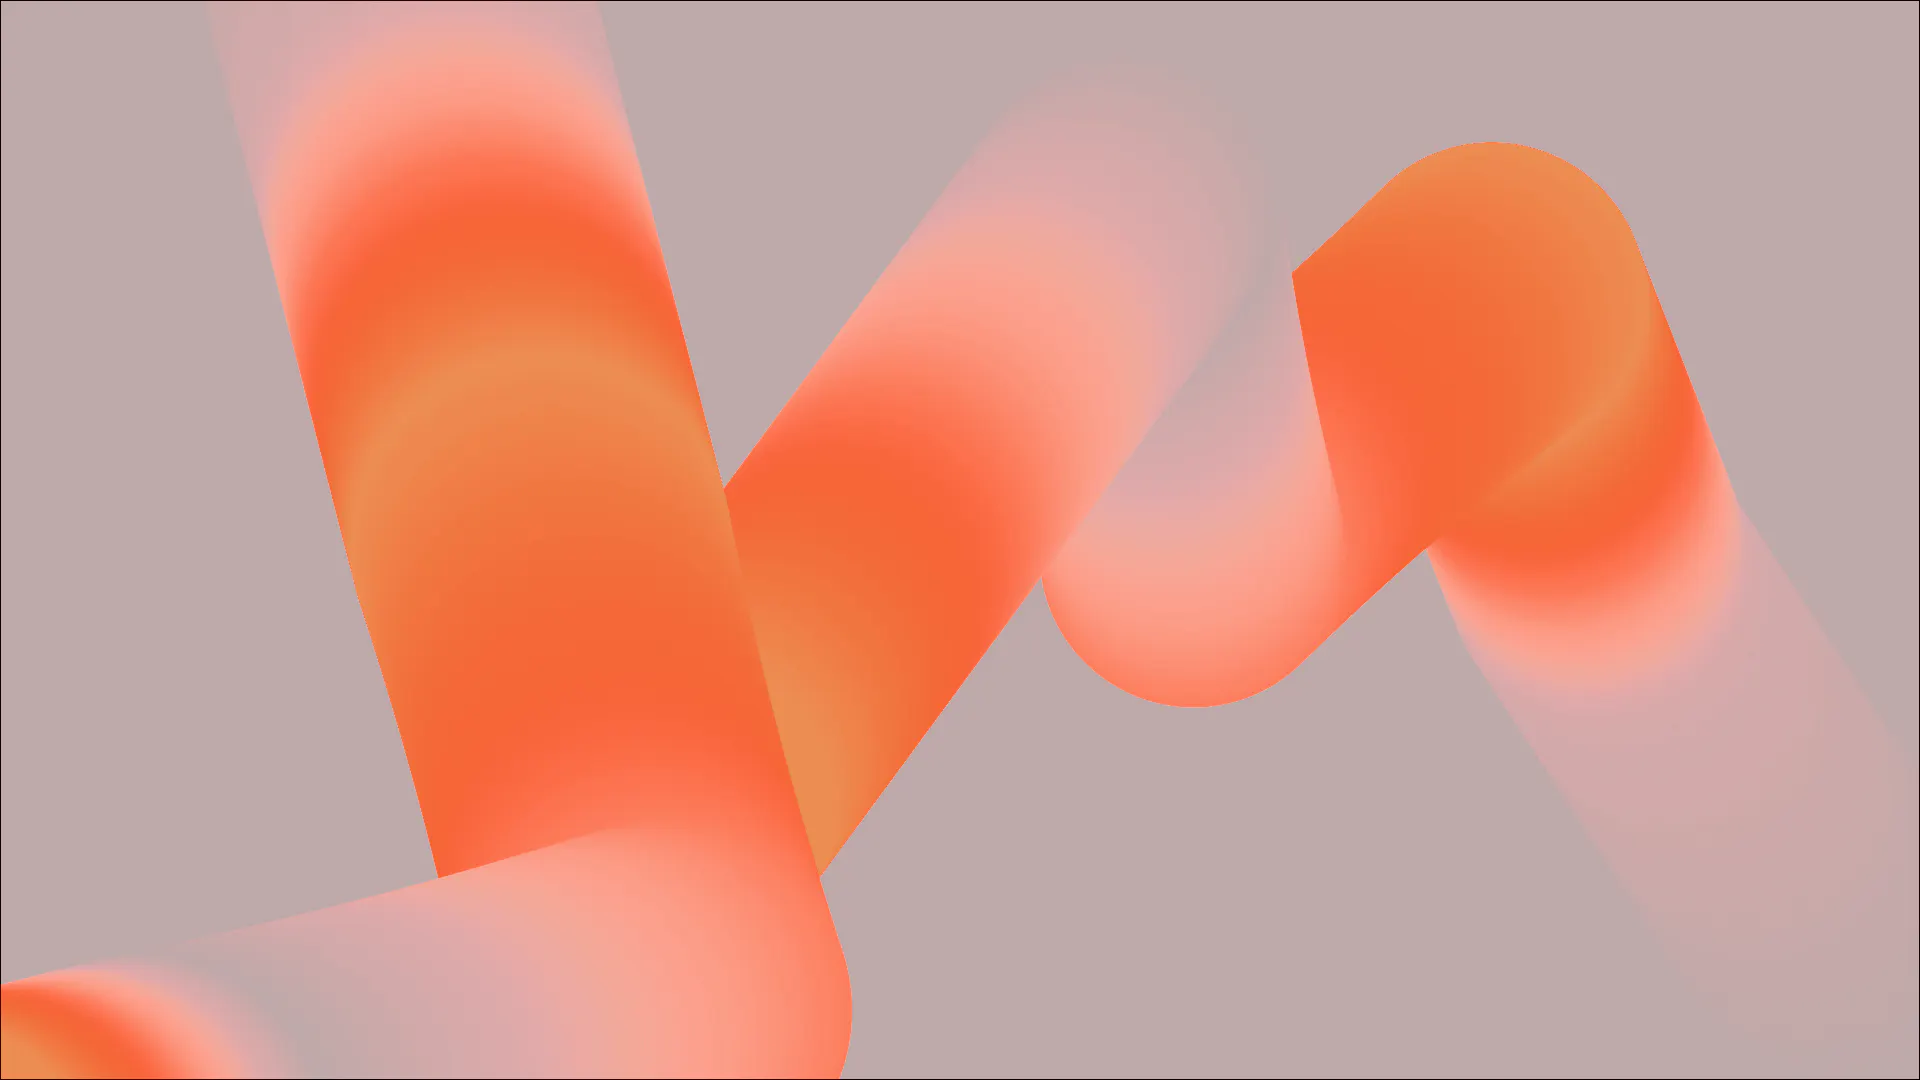 Orange tubular structures against warm grey background - New Year, New Wonderlanders